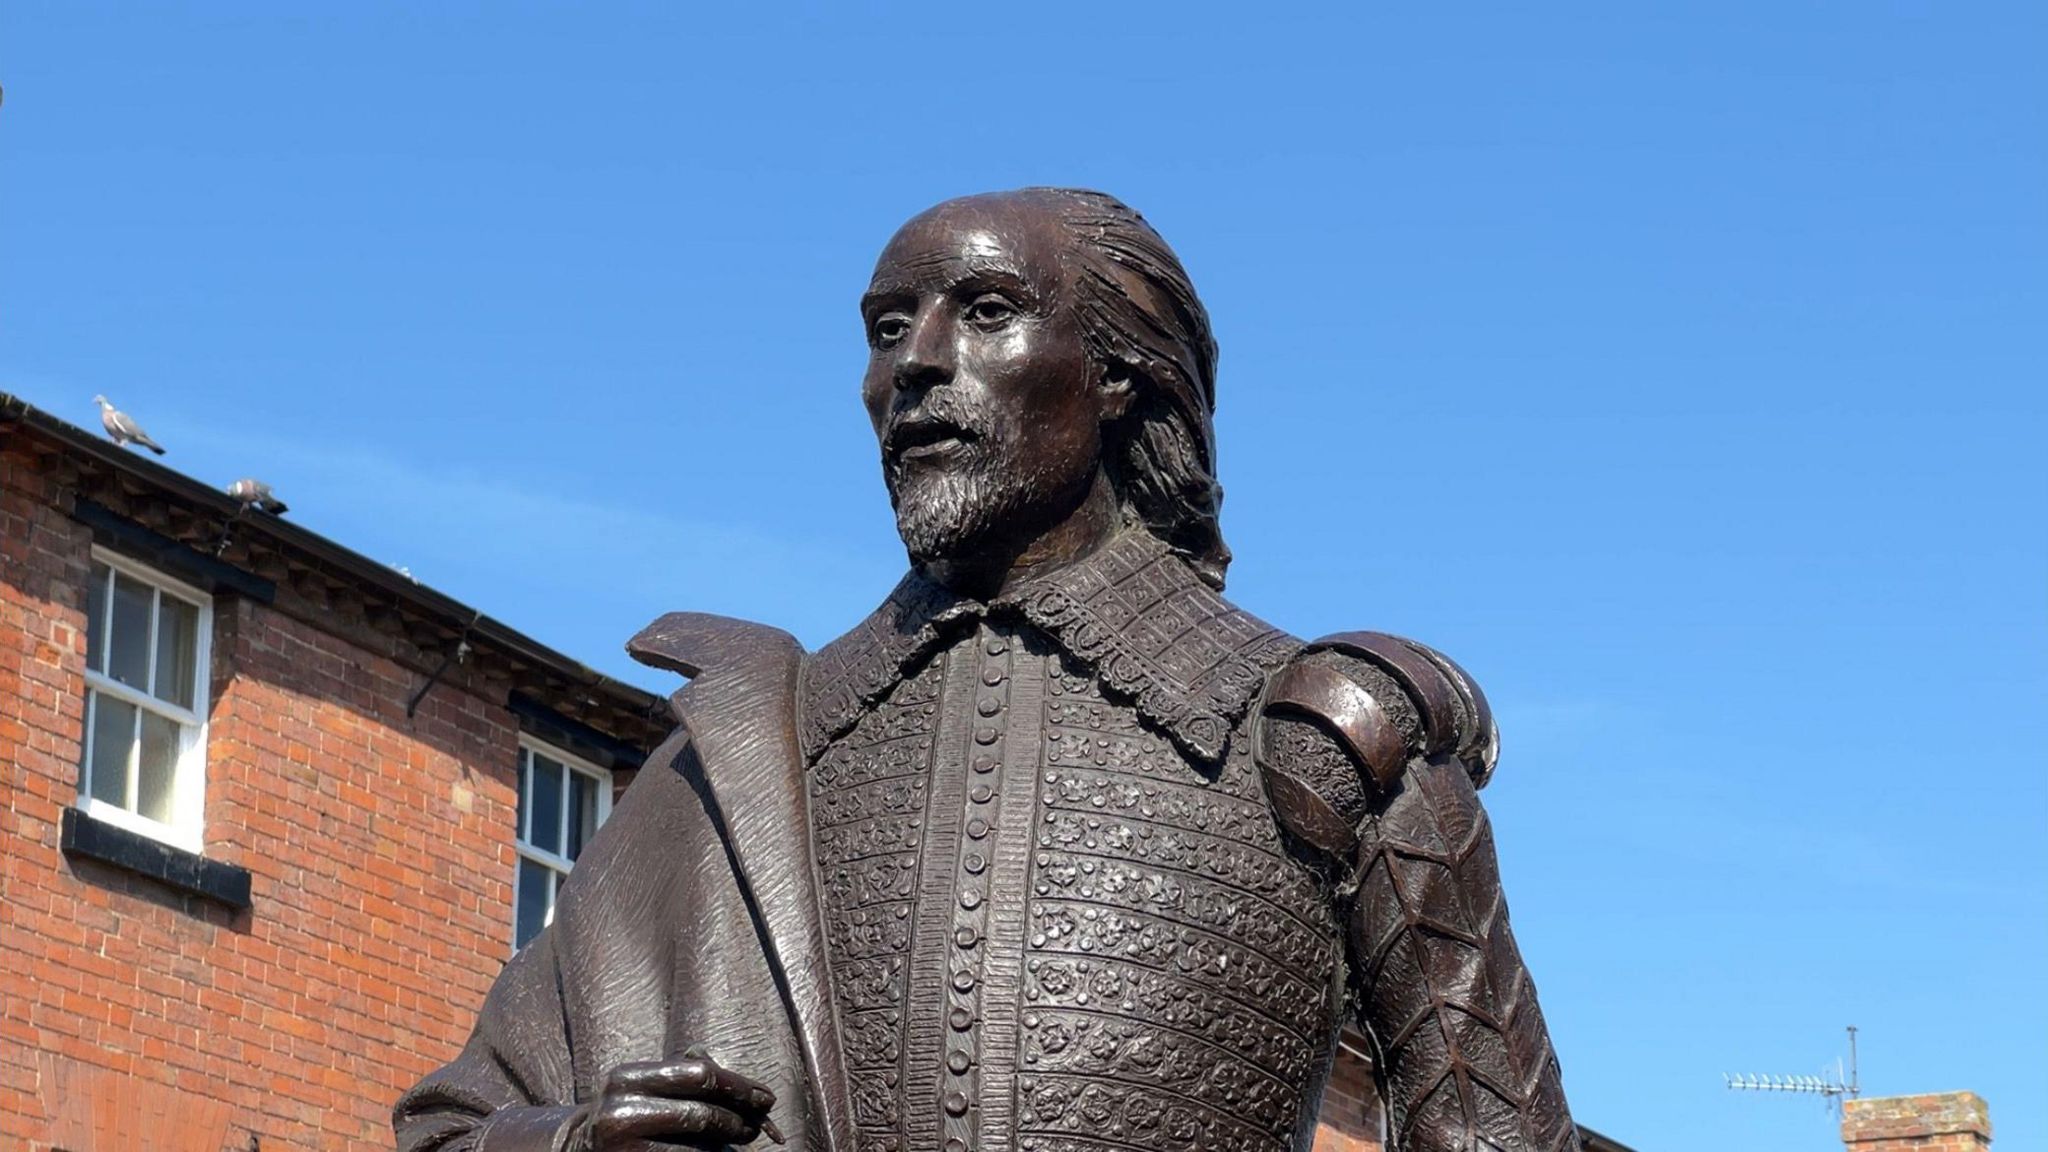 A statue of William Shakespeare